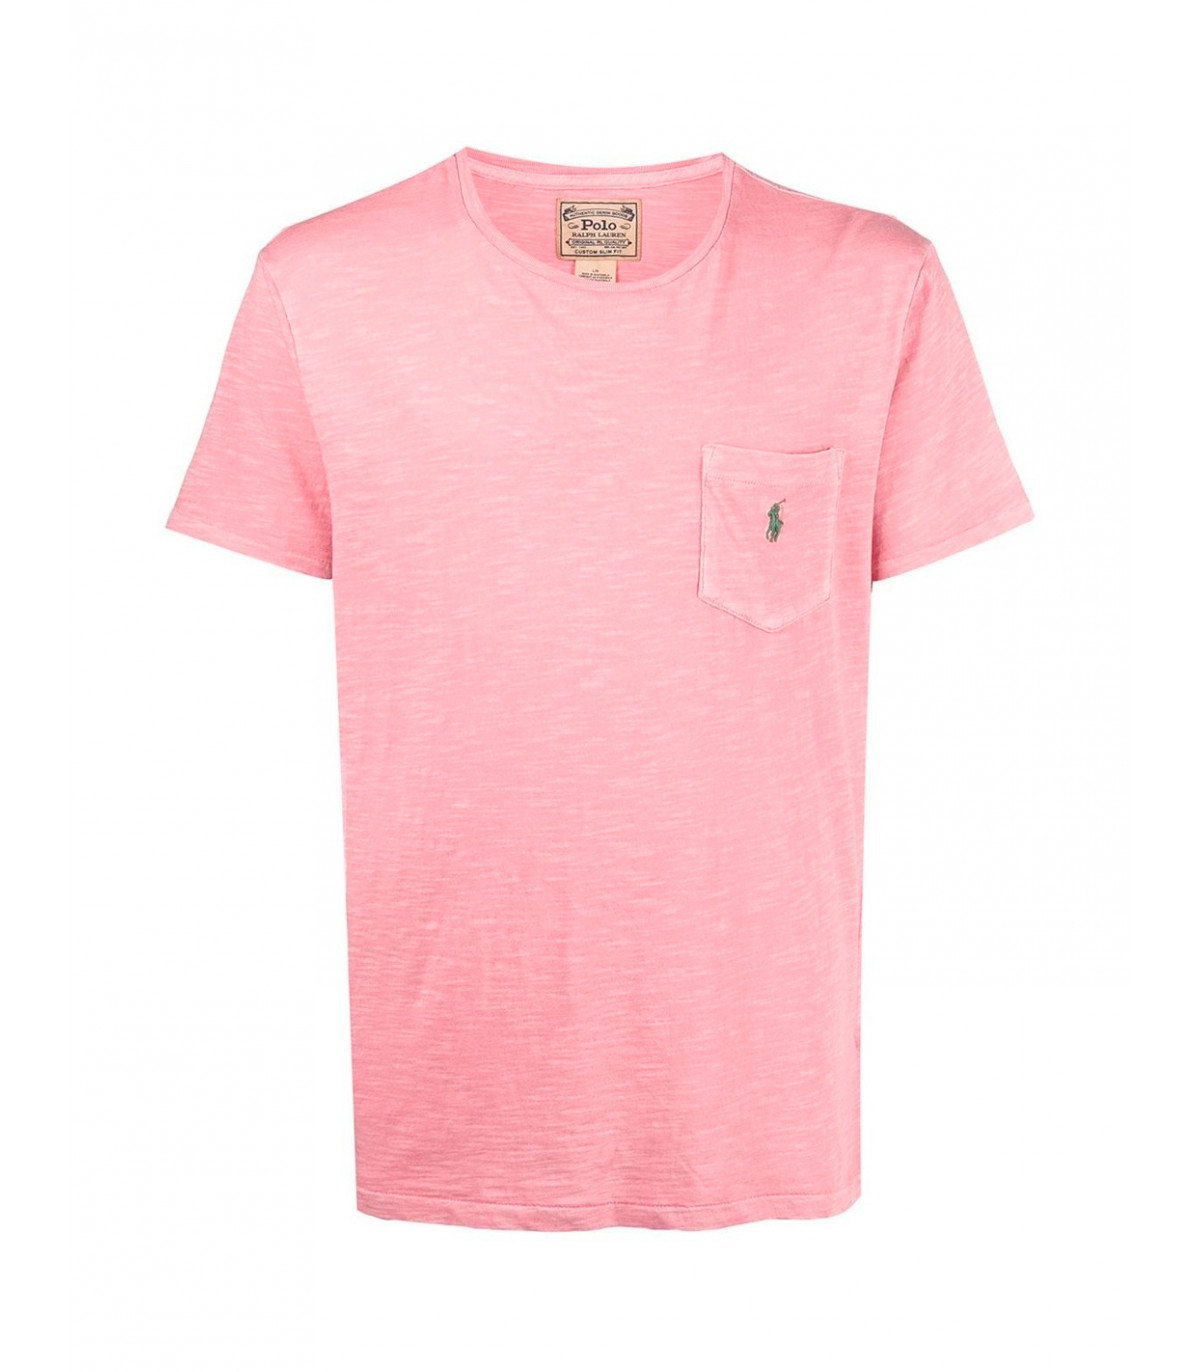 Polo Ralph Lauren - Camiseta Pocket - Rosa